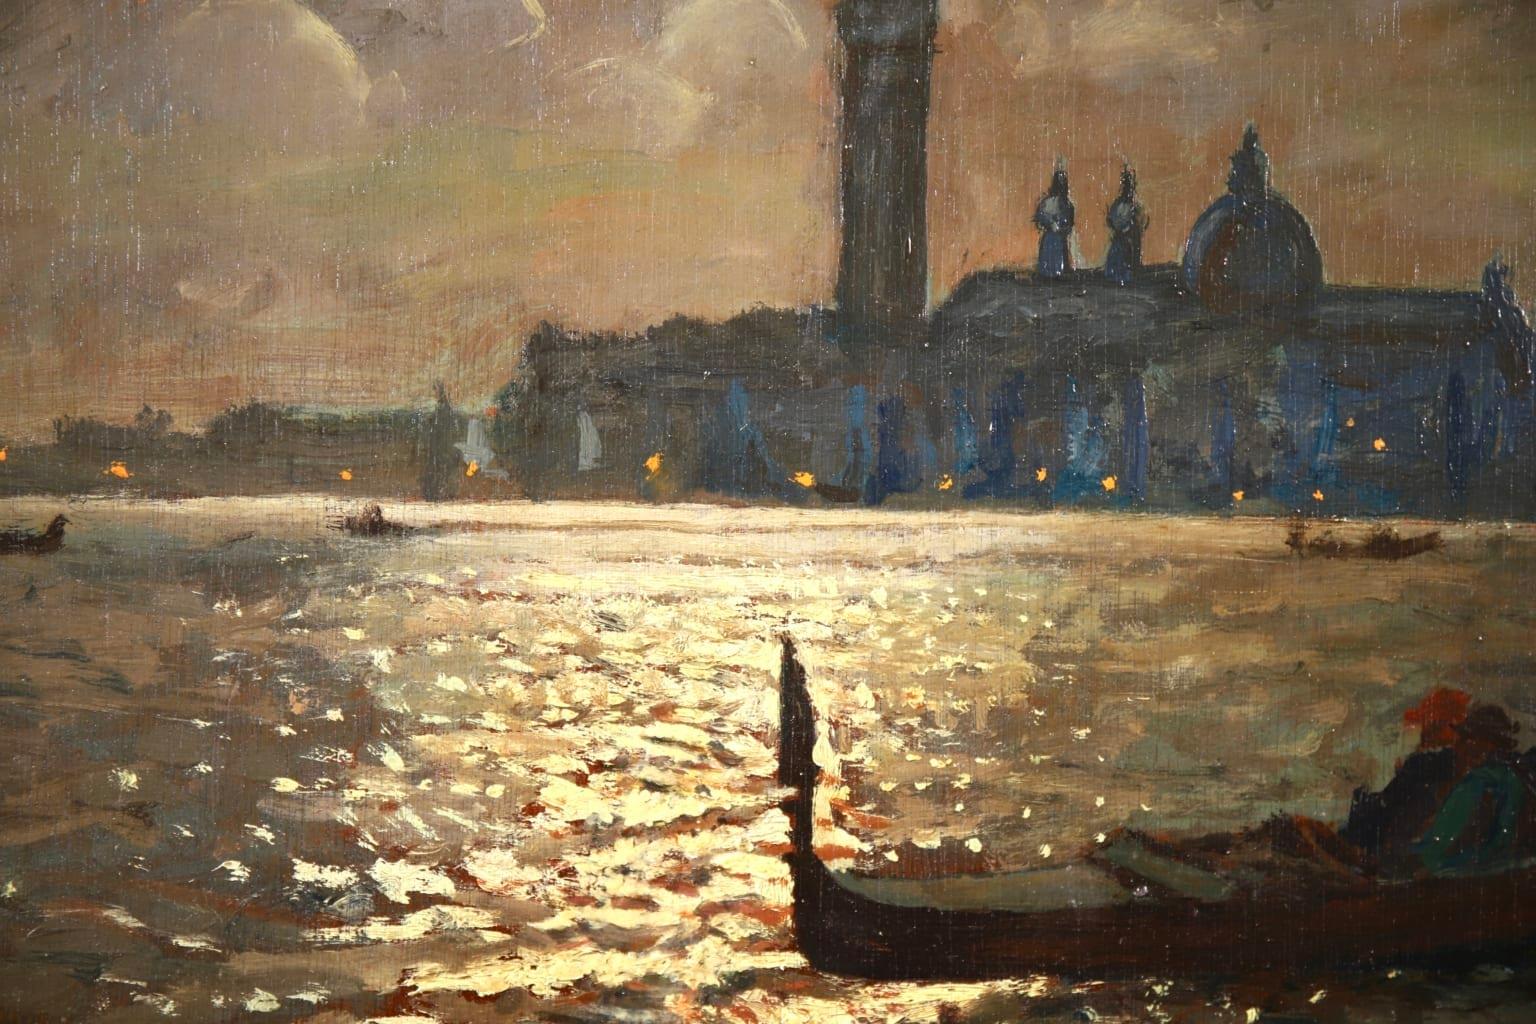 Venice - Evening - Impressionist Oil, Boats in Seascape by Vartan Makhokhian 10